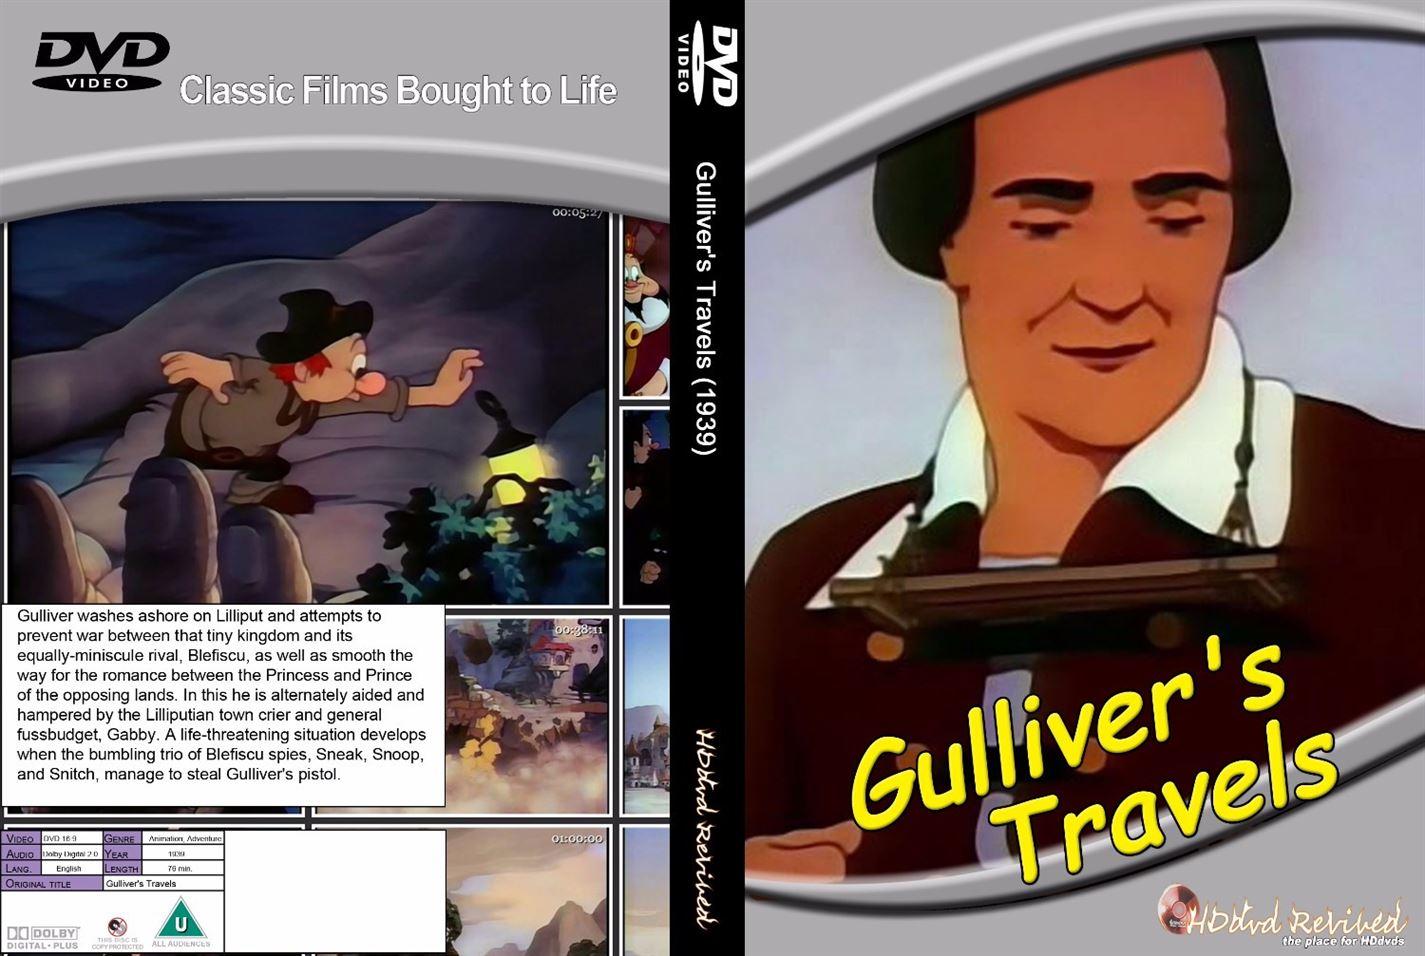 Gulliver's Travels (1939) - DVD - (HDDVD-Revived) - NEW - UK SELLER